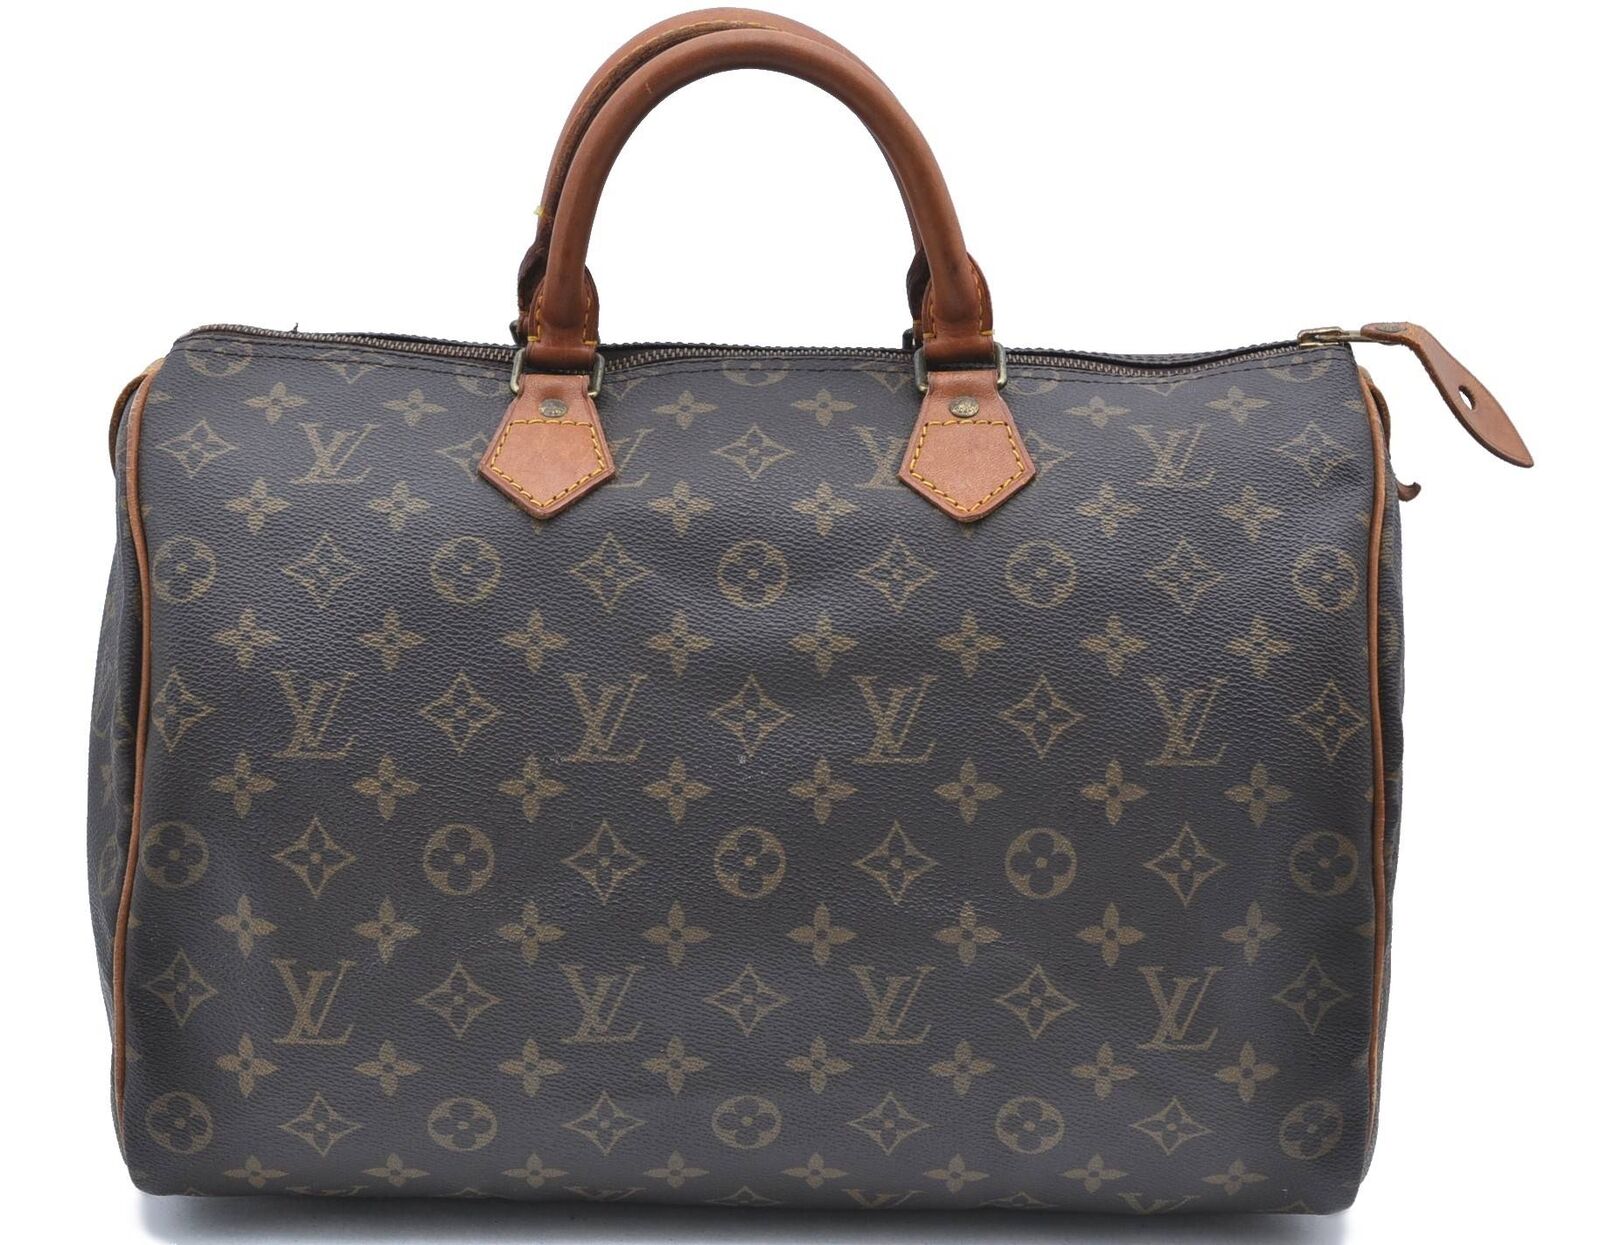 Authentic Louis Vuitton Monogram Speedy 35 Hand Bag M41524 LV H6168